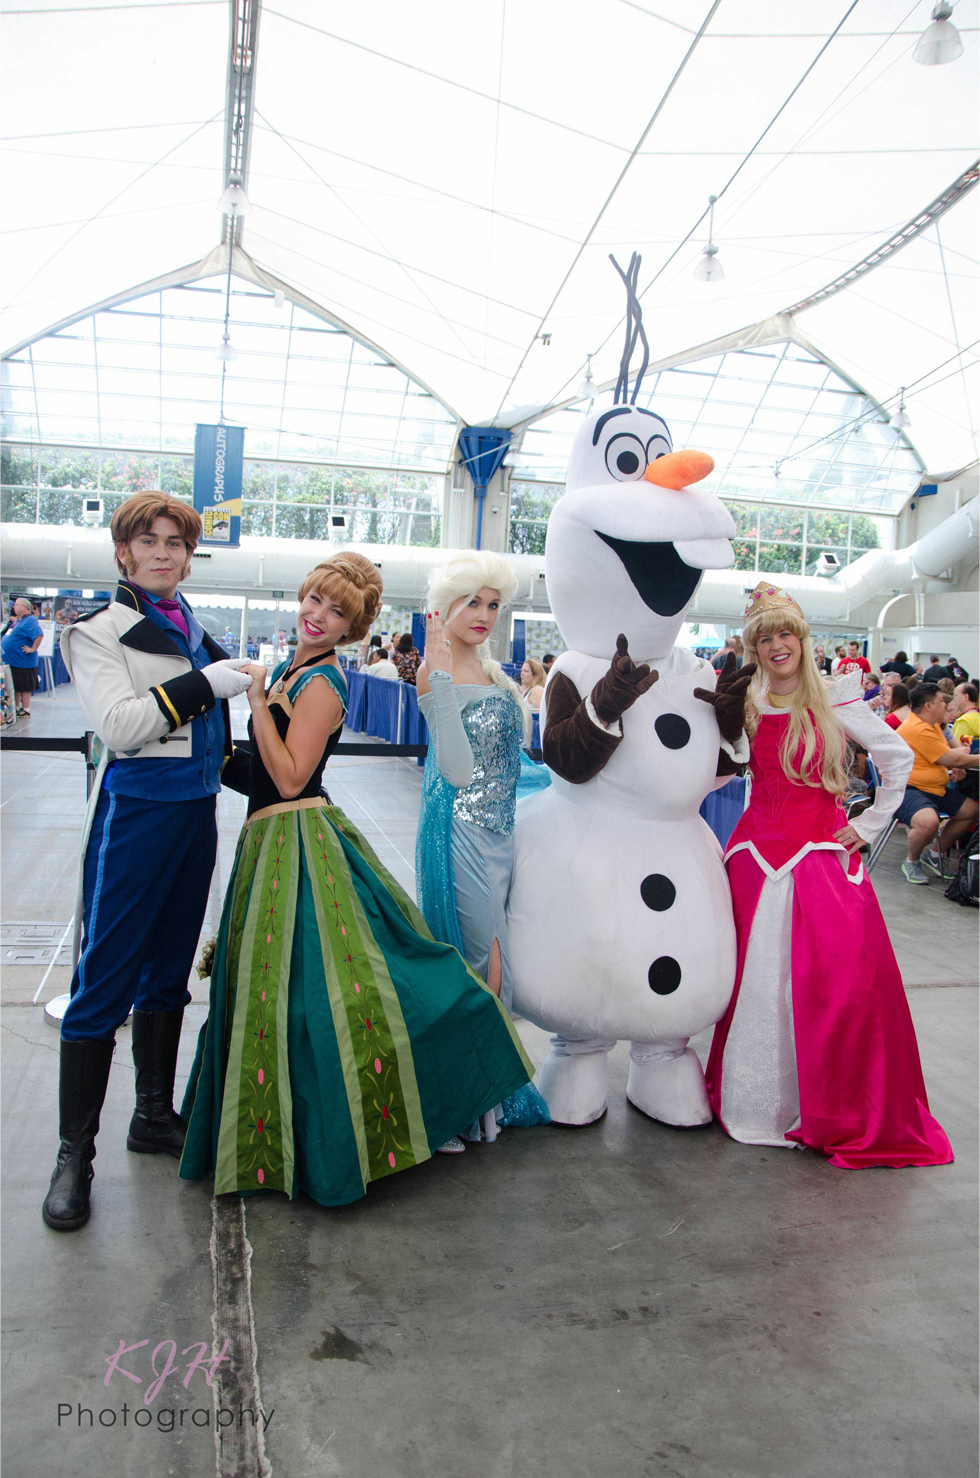 Hans, Anna, Elsa, Olaf, and Princess Aurora